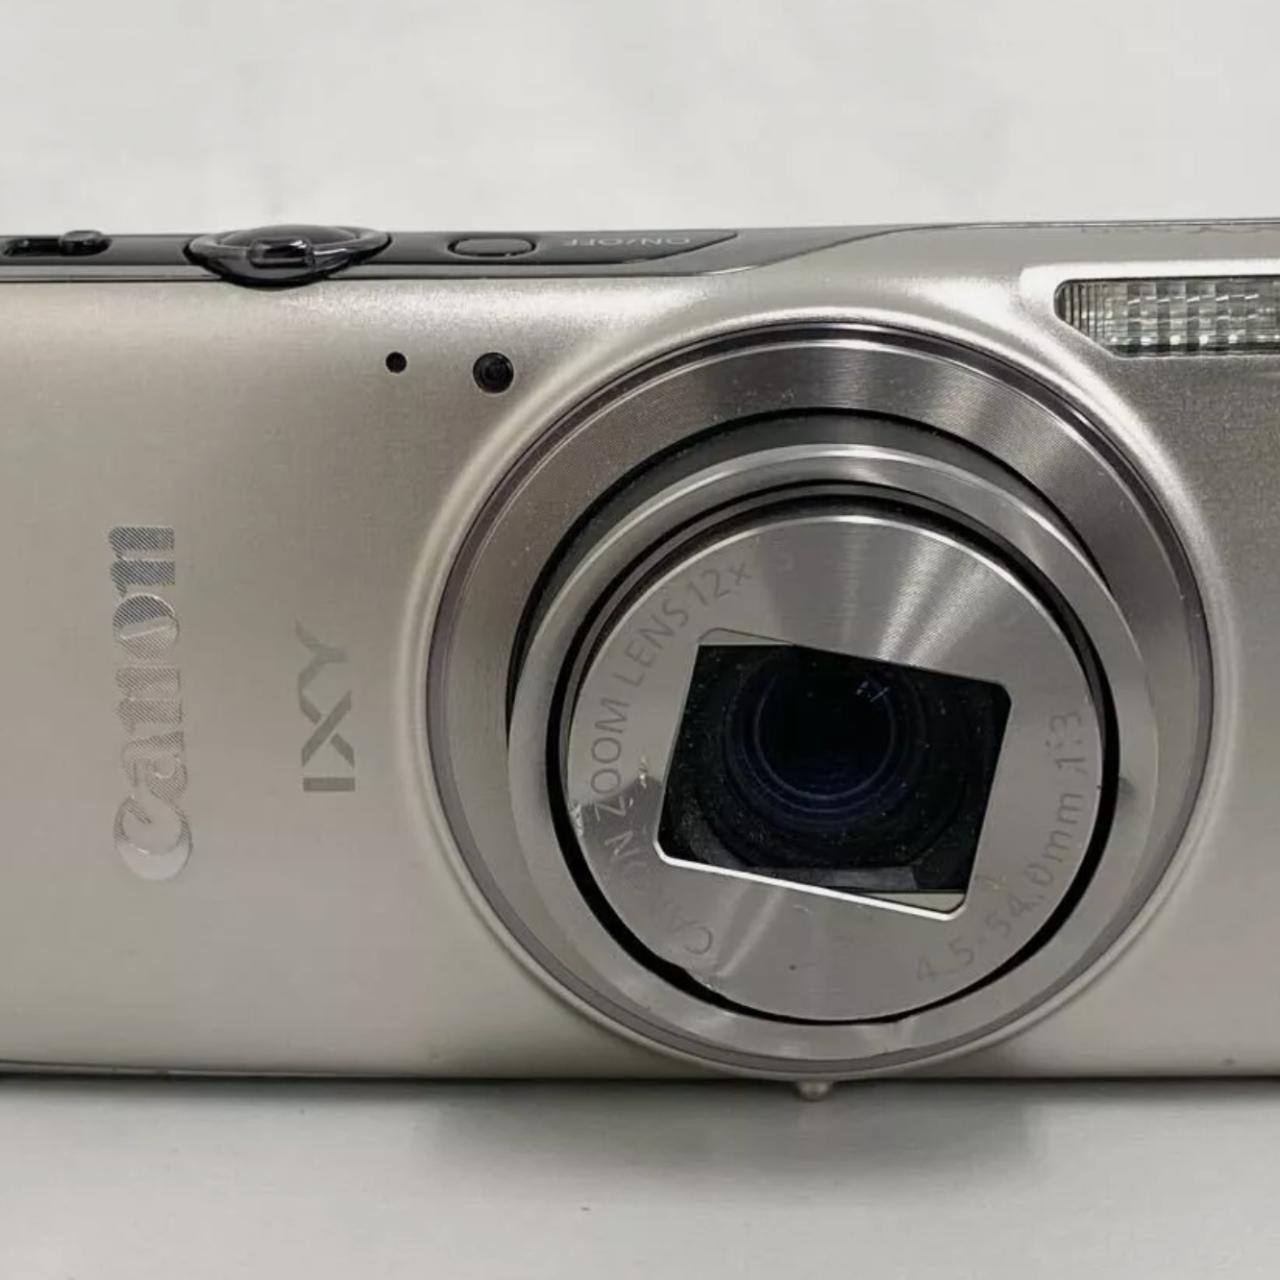 Canon IXY 650 PowerShot Elph 360 Silver Compact... - Depop